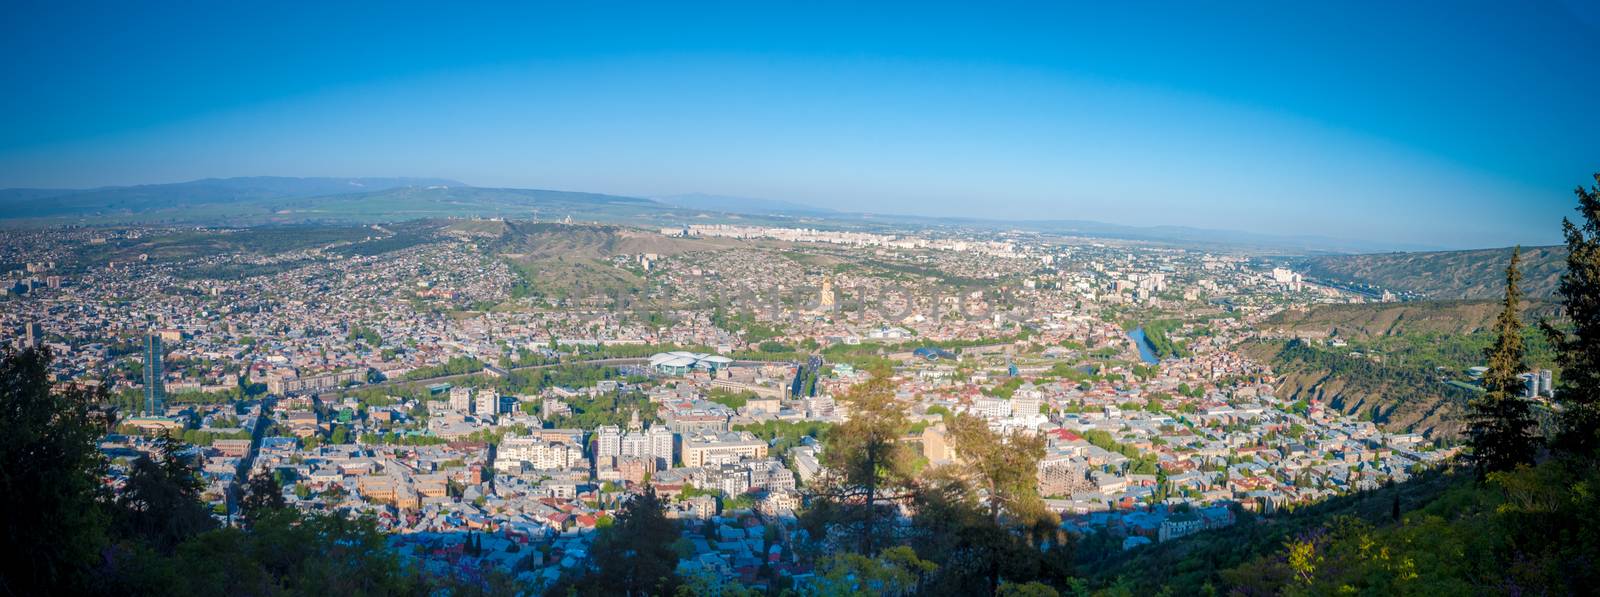 Tbilisi view by yuyu